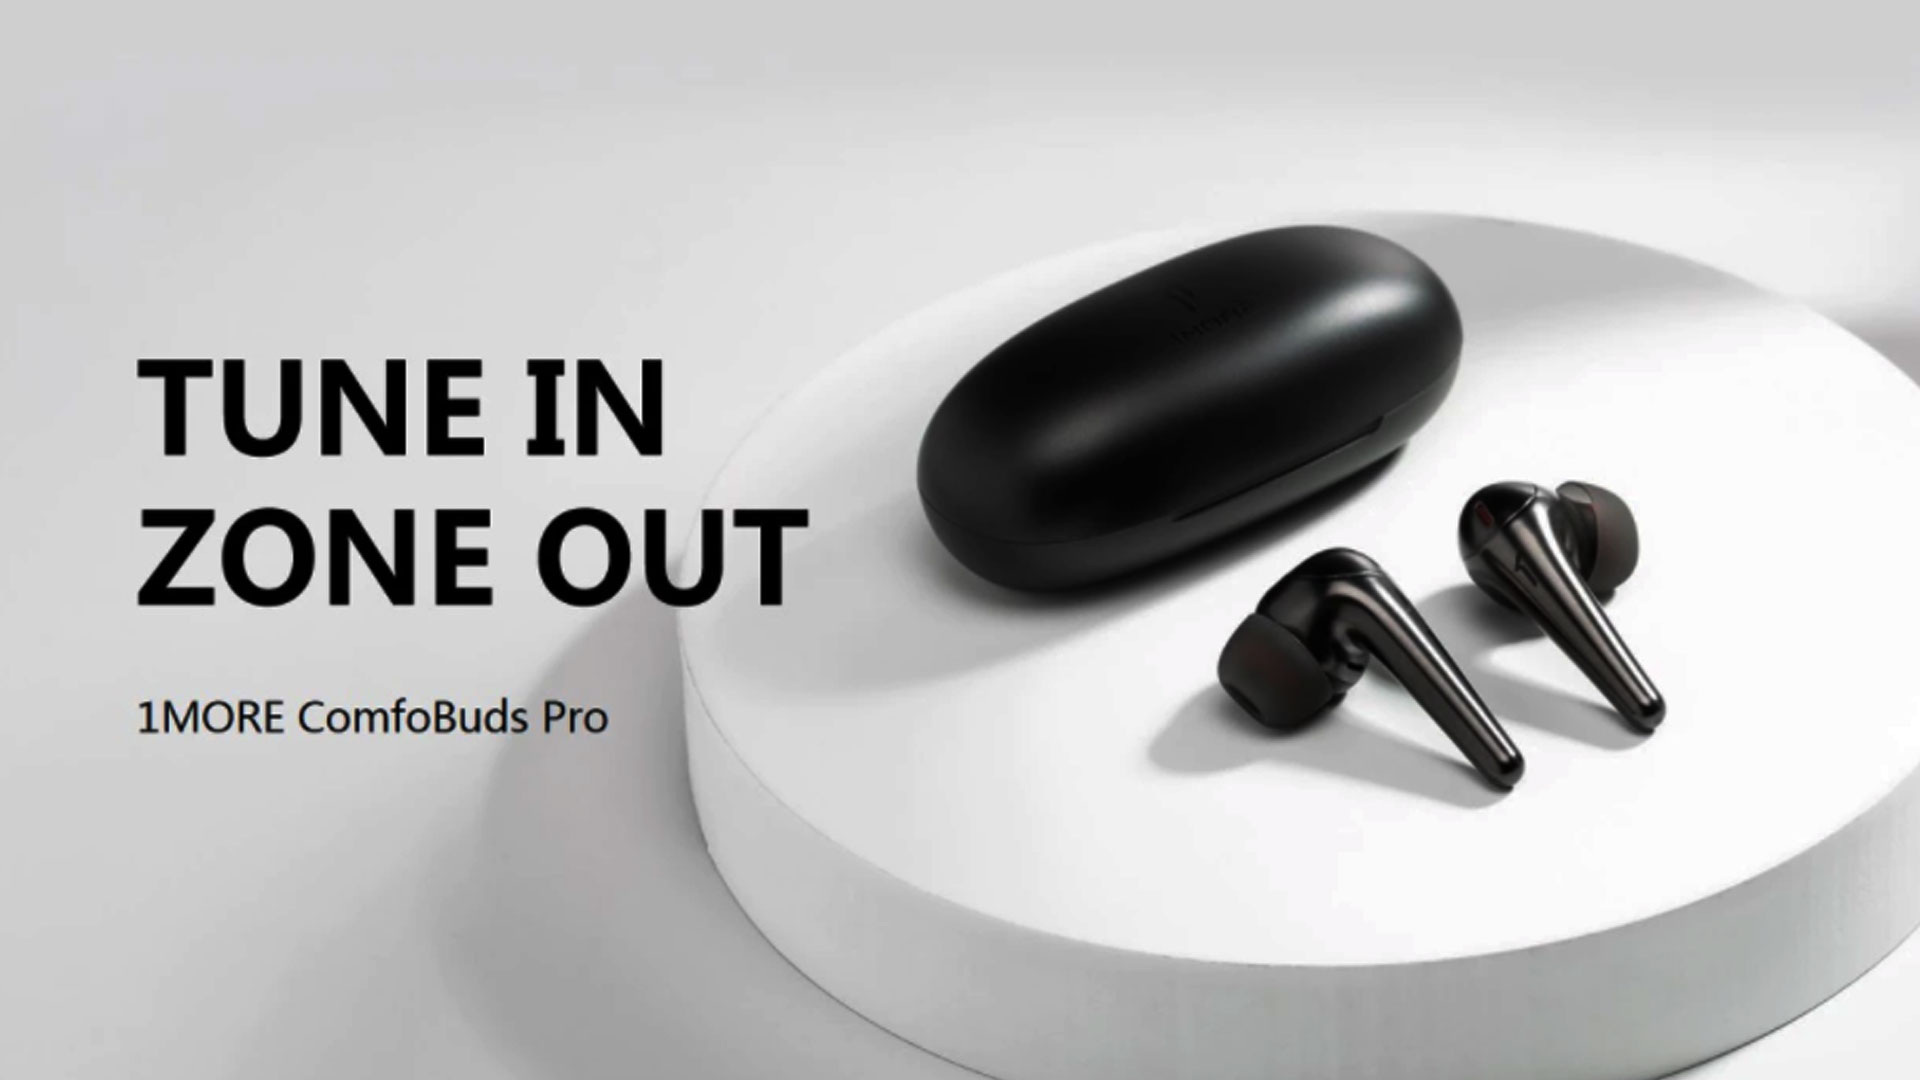 1MORE ComfoBuds Pro ComfoBuds Pro TWS earphones wireless earbuds